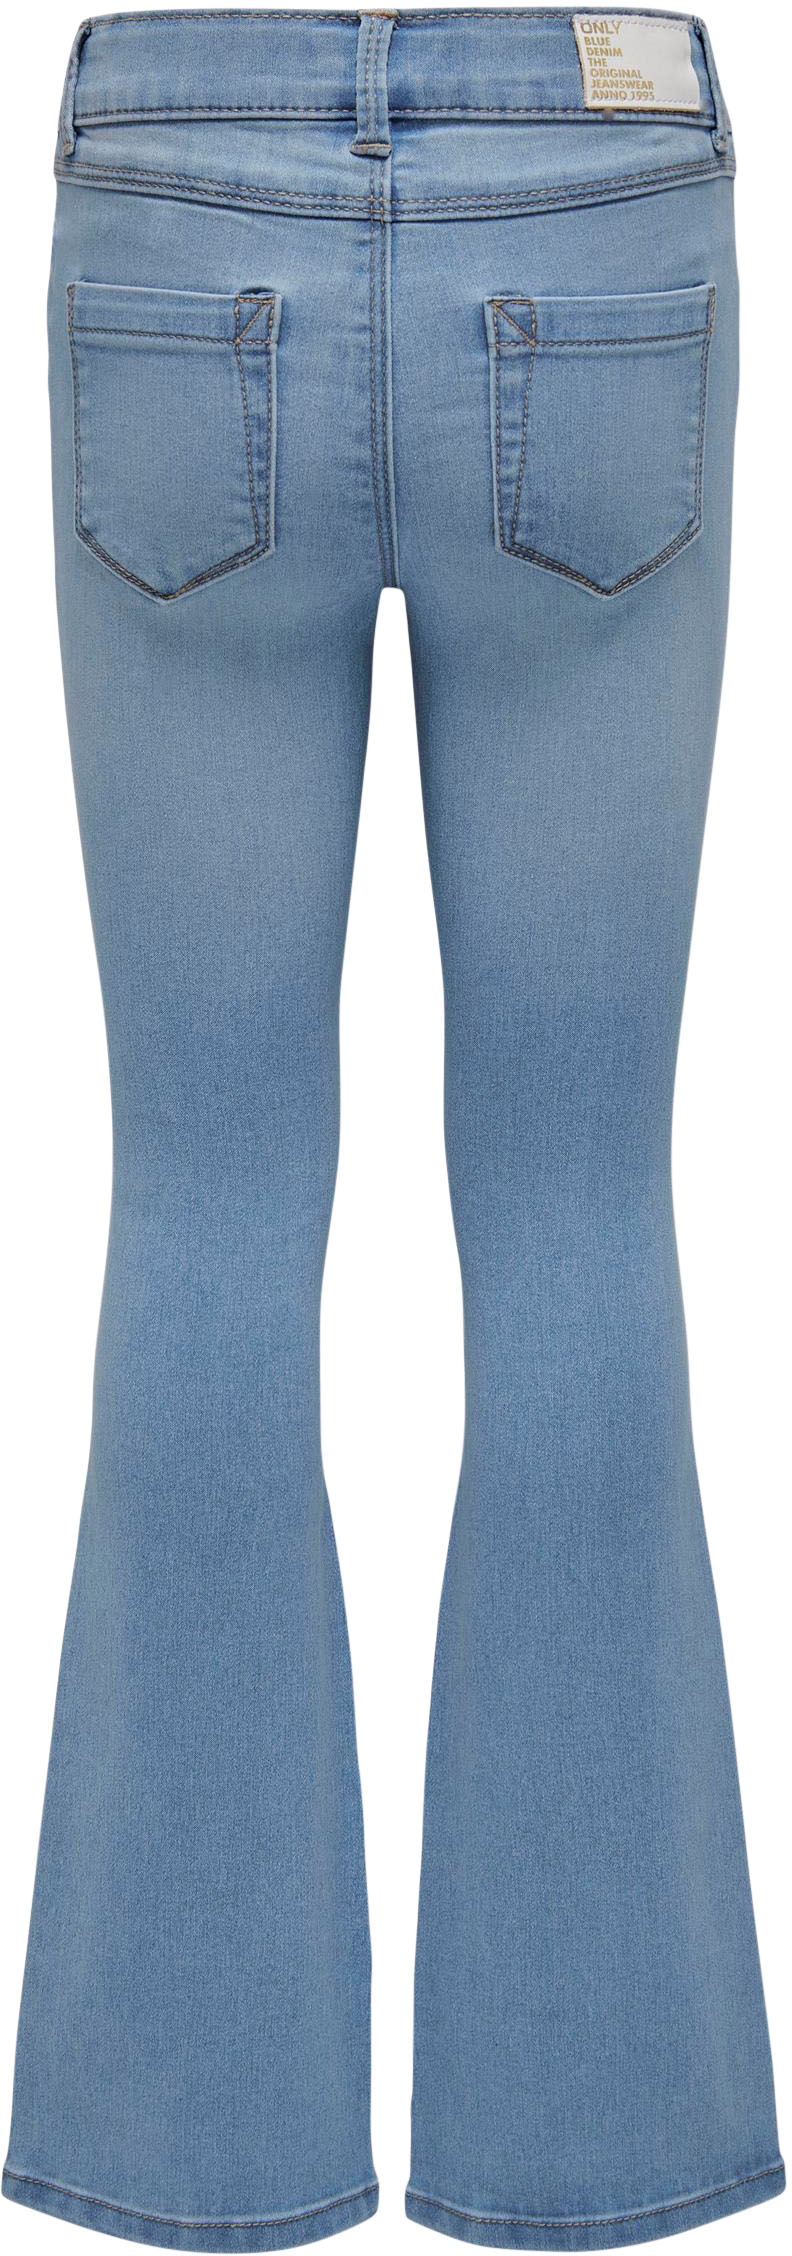 Trendige KIDS ONLY Bootcut-Jeans »KOGROYAL LIFE REG FLARED PIM020 NOOS«  ohne Mindestbestellwert shoppen